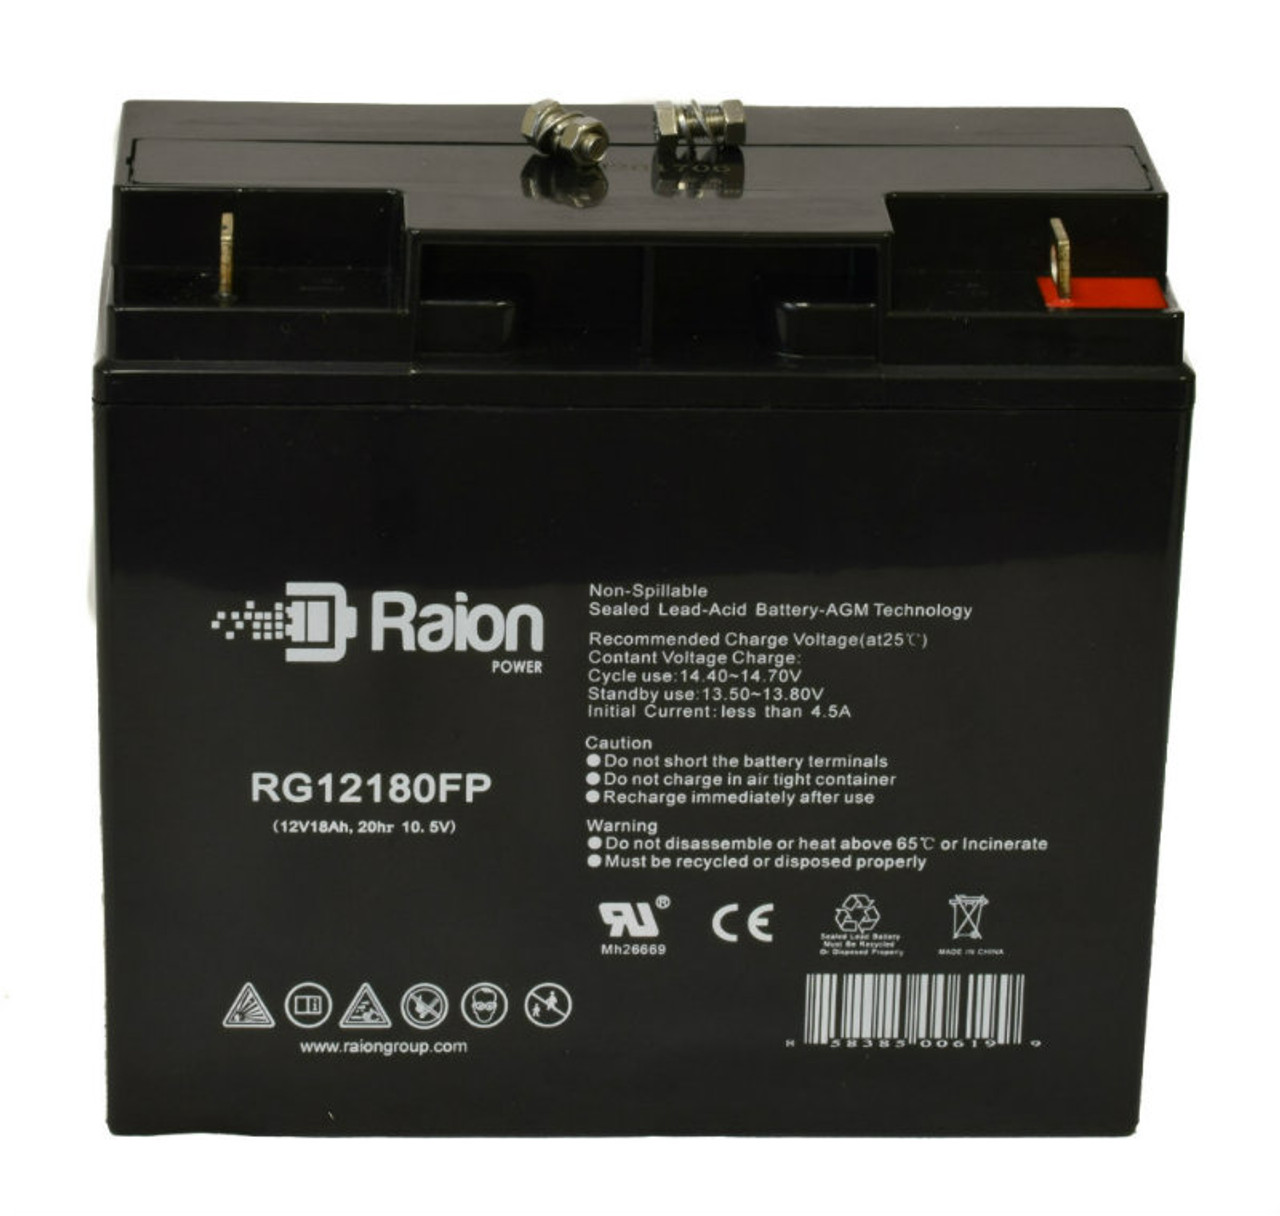 Raion Power RG12180FP 12V 18Ah Lead Acid Battery for Vision CP12170